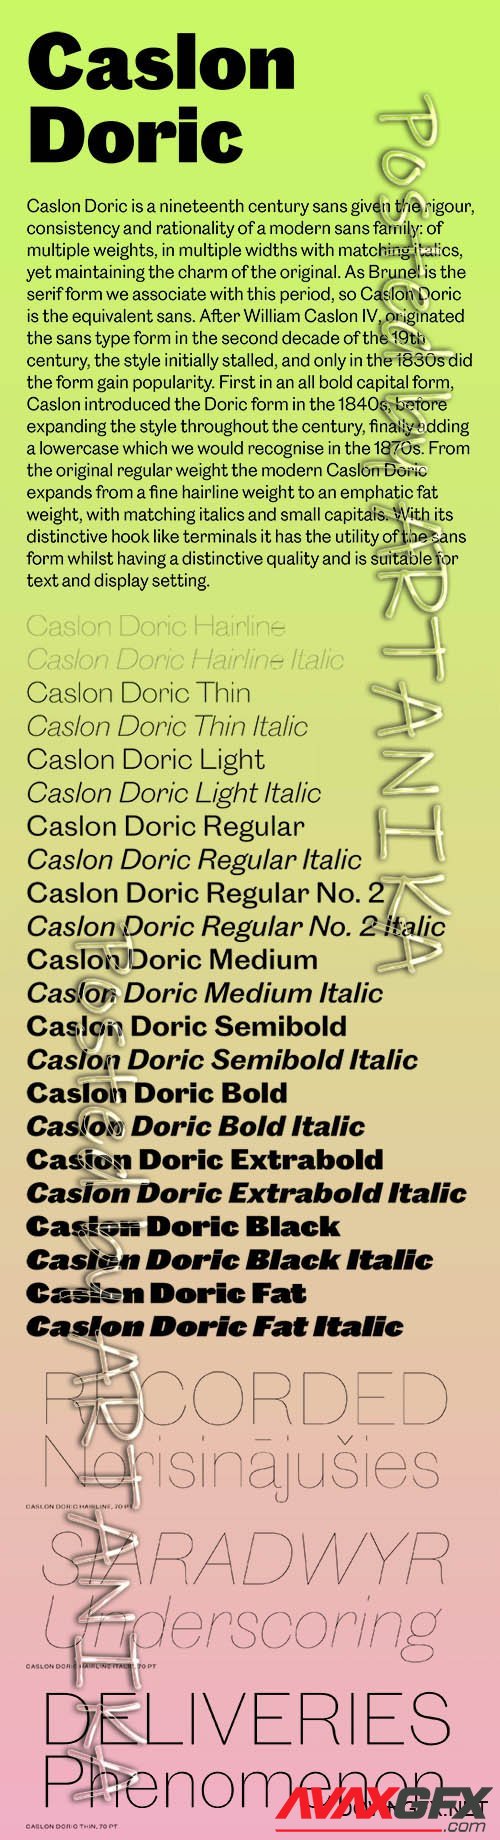 Caslon Doric Font Family